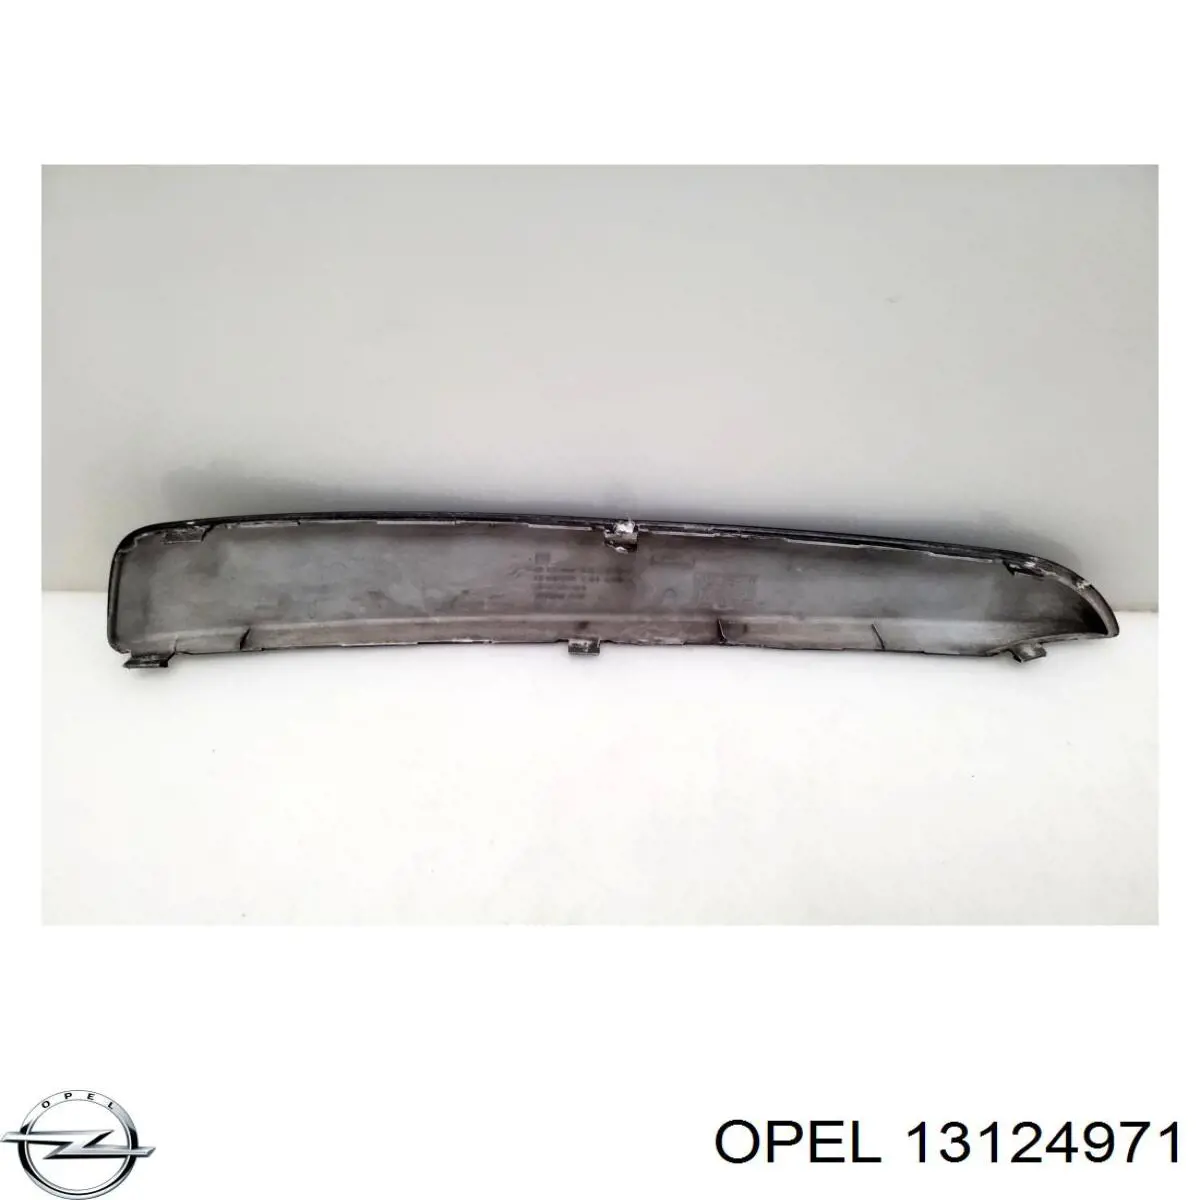 13124971 Opel moldura de parachoques delantero izquierdo